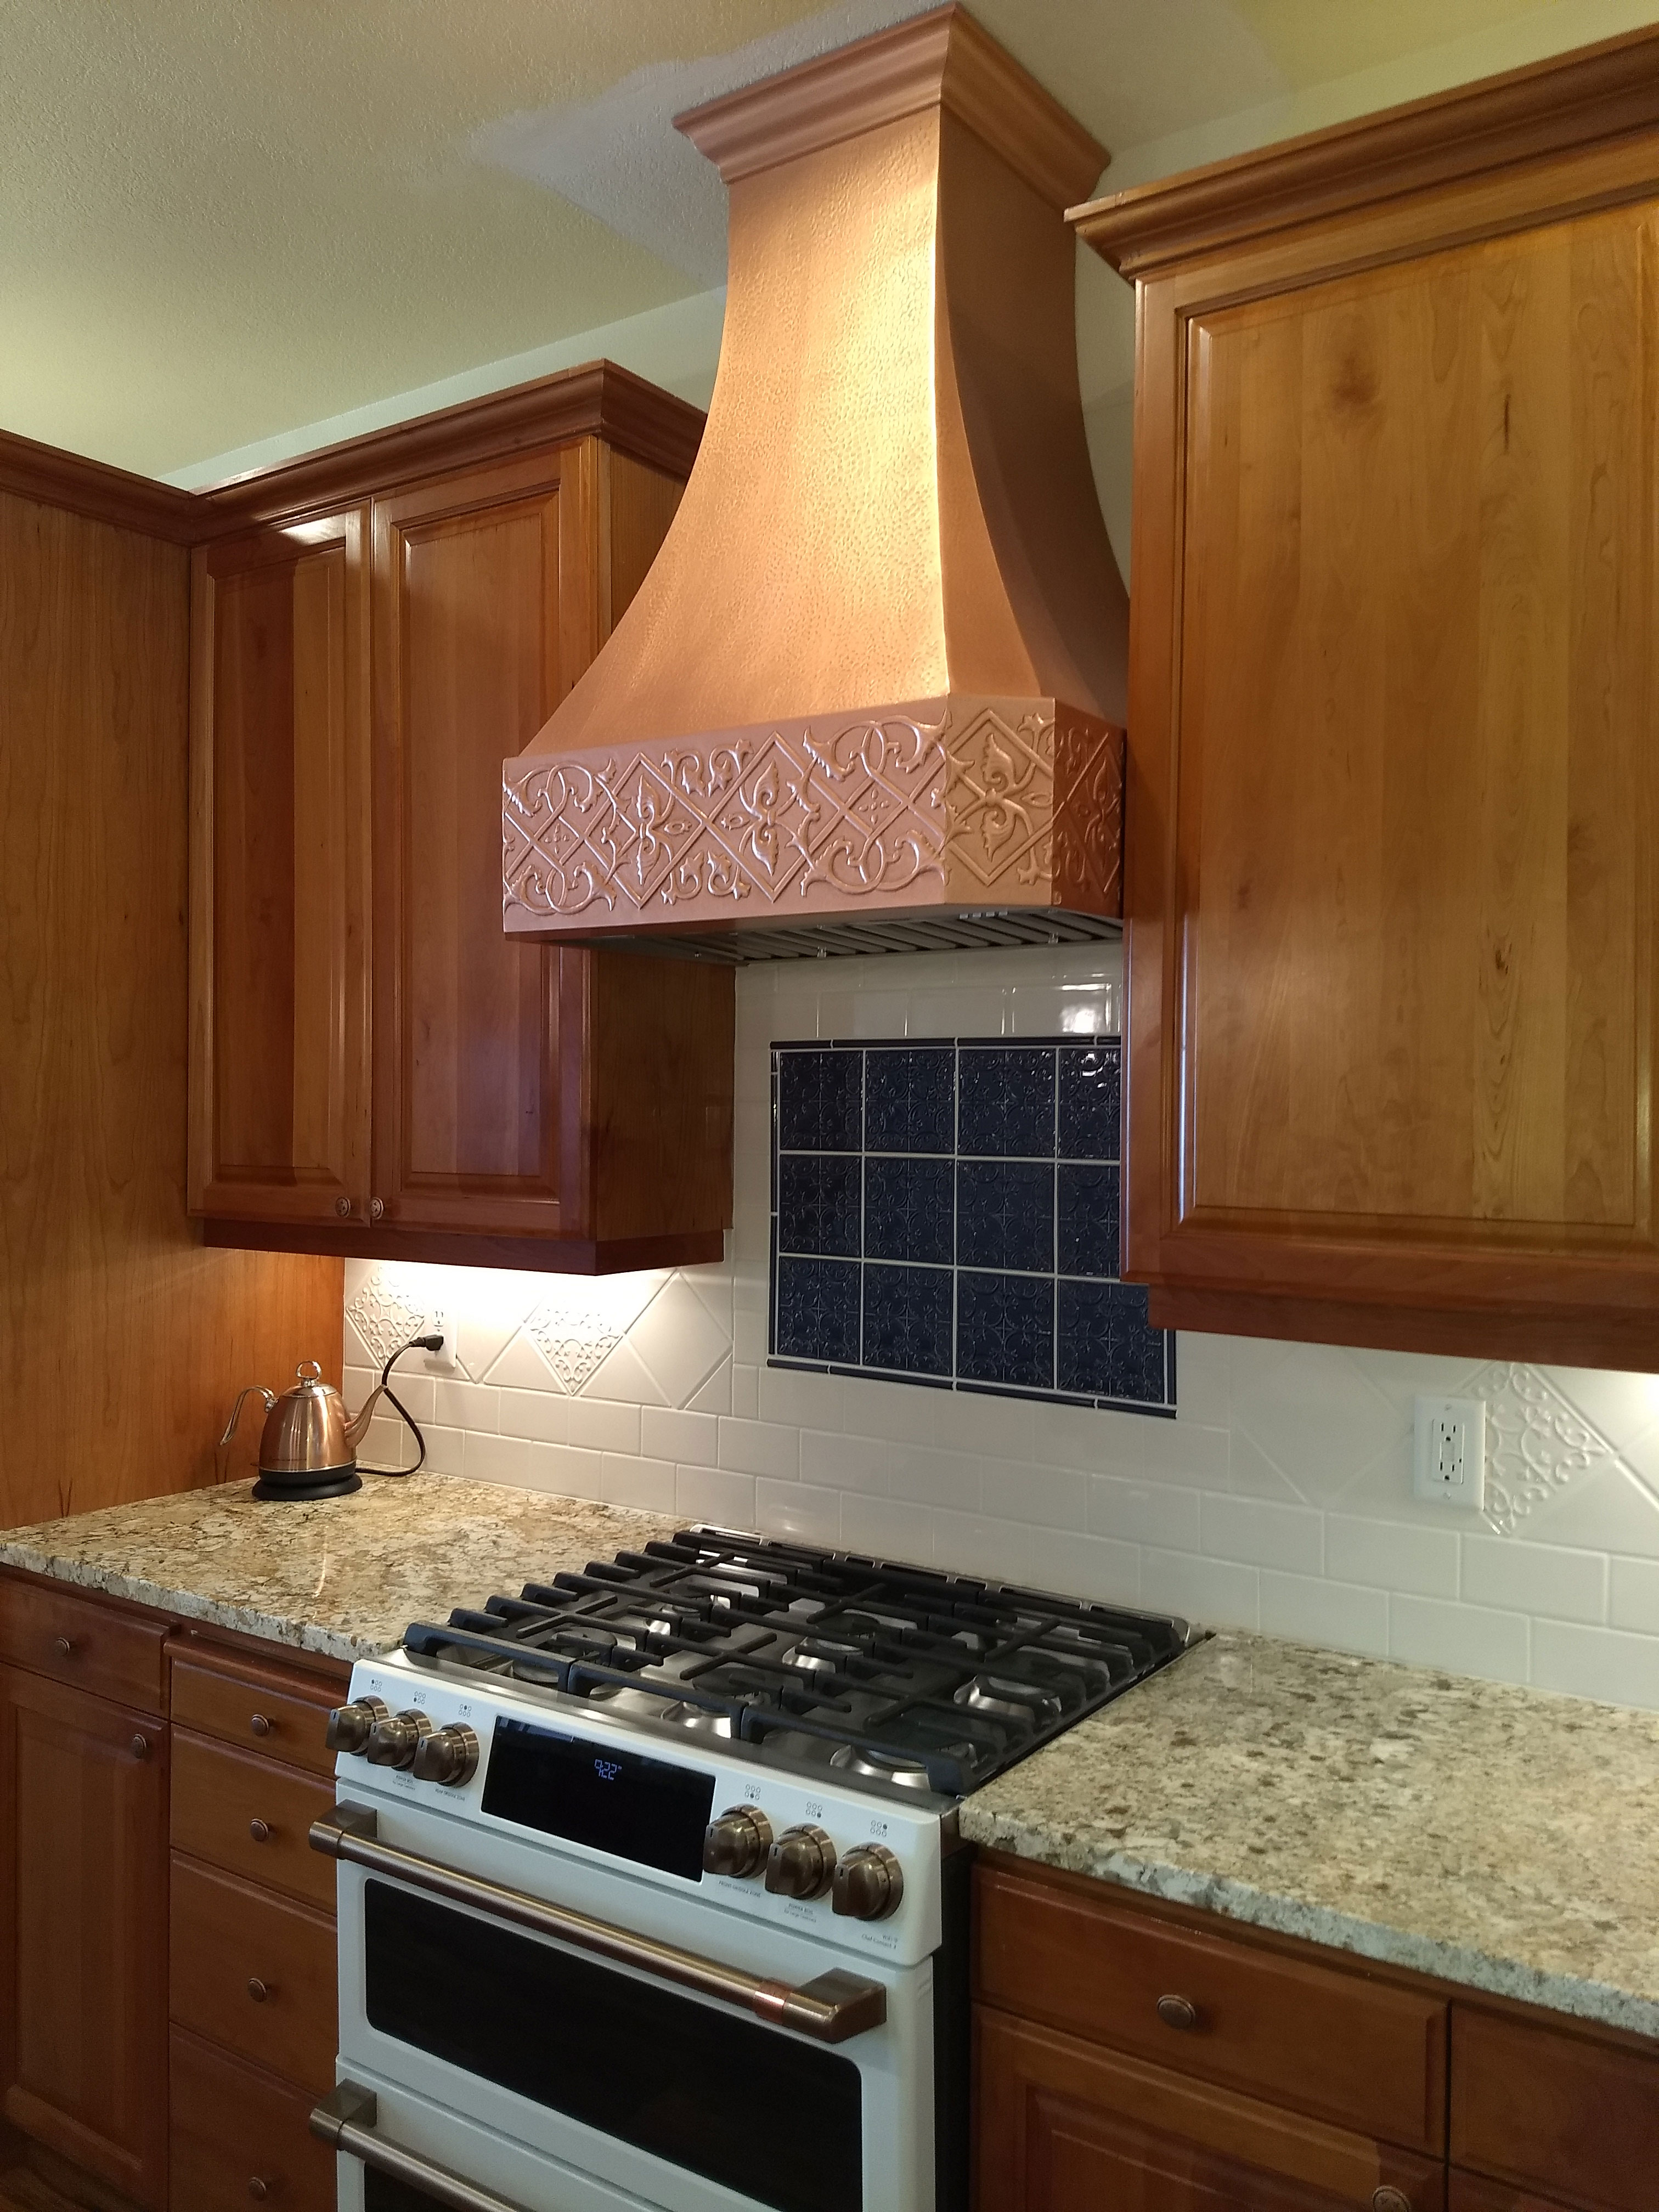 Kitchen design idea kitchen sink idea features brown kitchen cabinets with beautiful marble kitchen countertops and marble backsplash